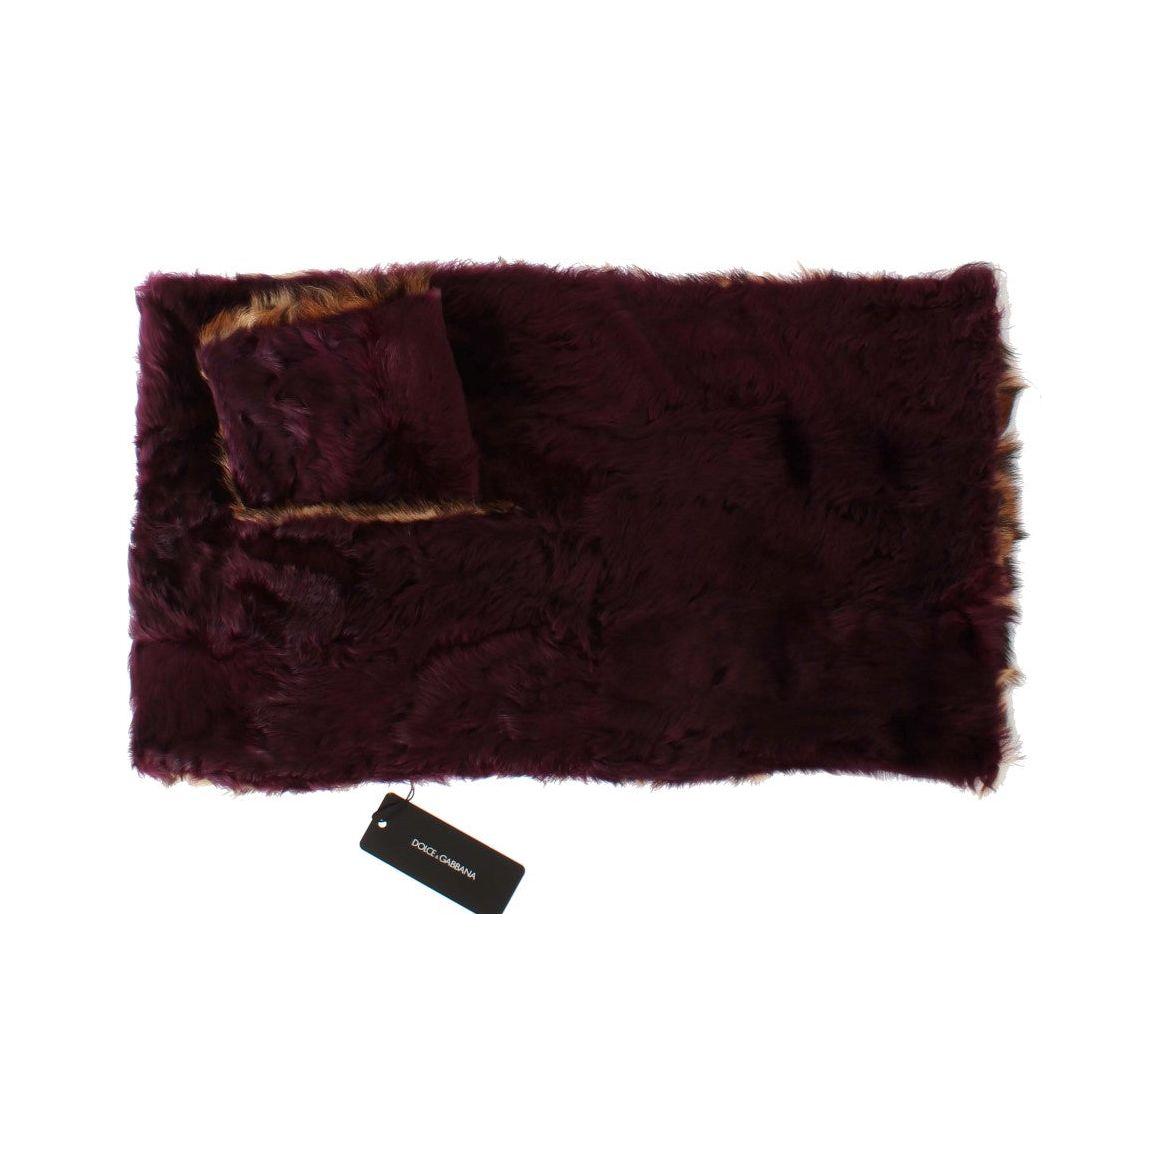 Dolce & Gabbana Exquisite Leopard Print Lambskin Fur Scarf purple-lamb-fur-leopard-print-scarf